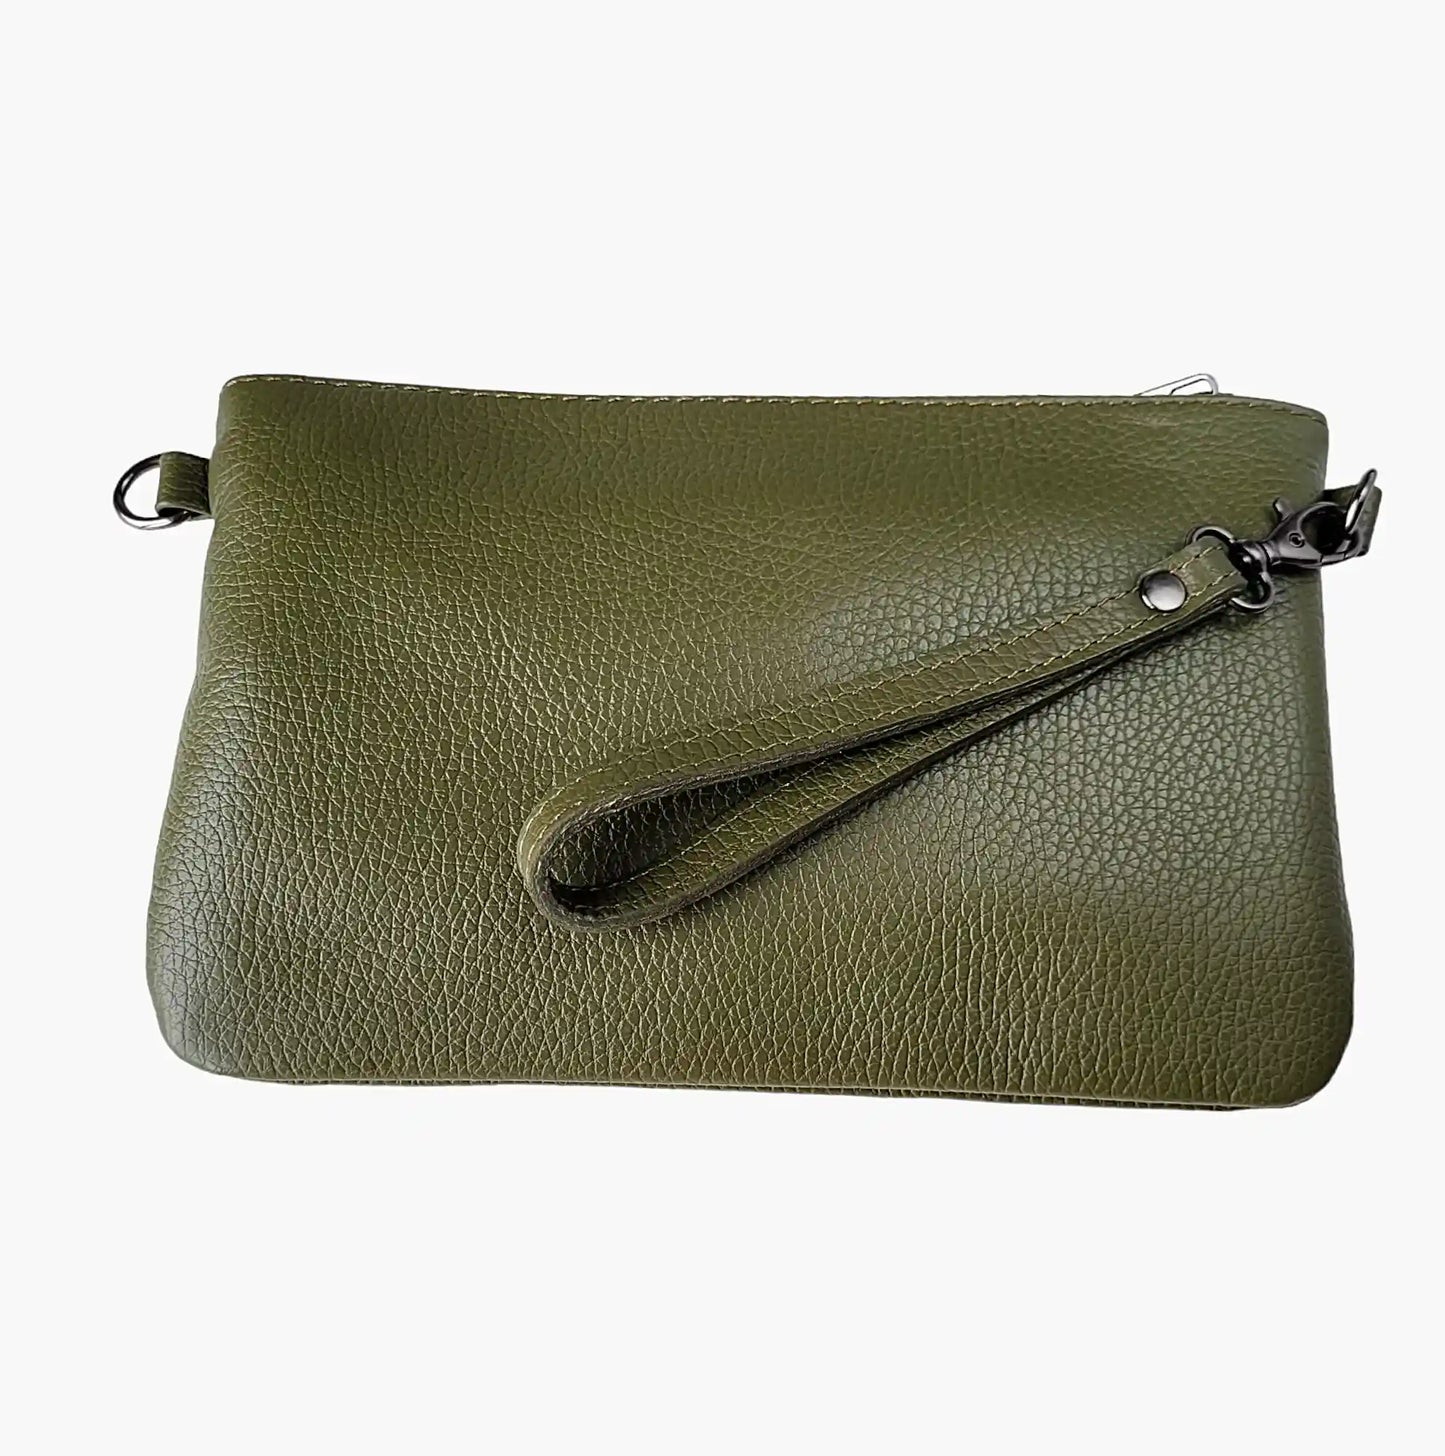 Crossbody-bag-Olive-green-leather-bag-clutch